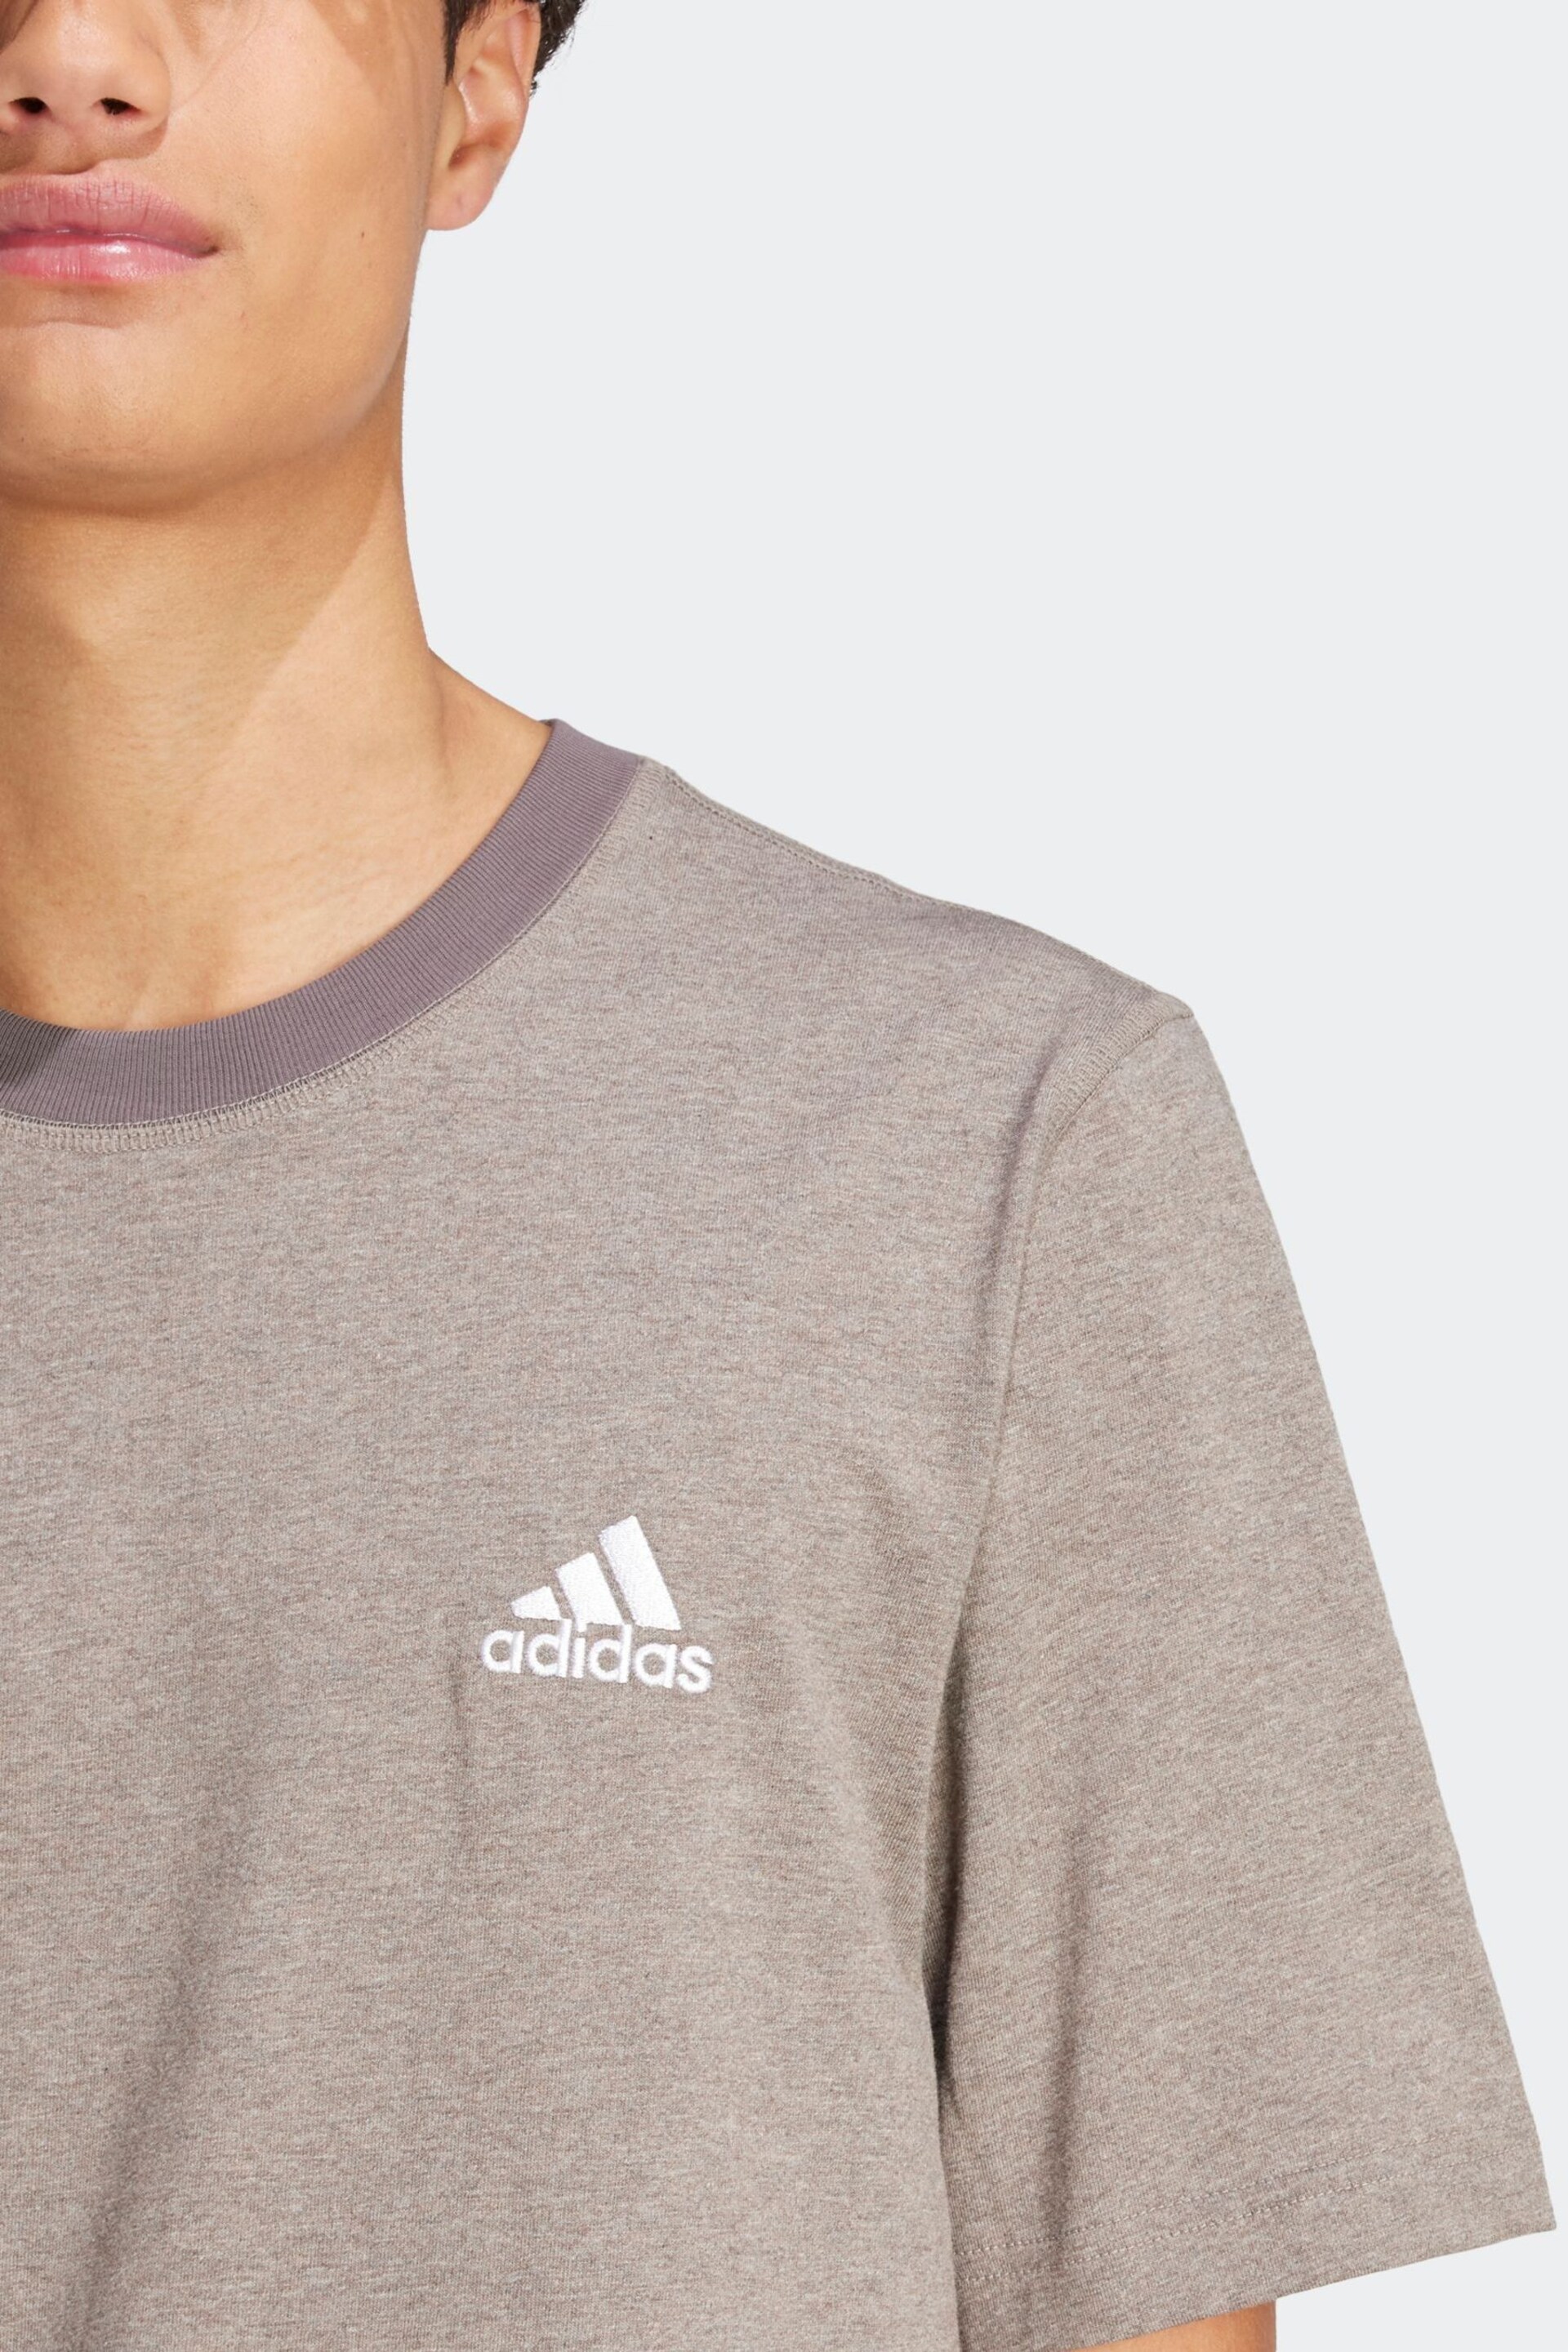 Adidas Grey Sportswear Seasonal Essentials Mélange T-Shirt - Image 5 of 8